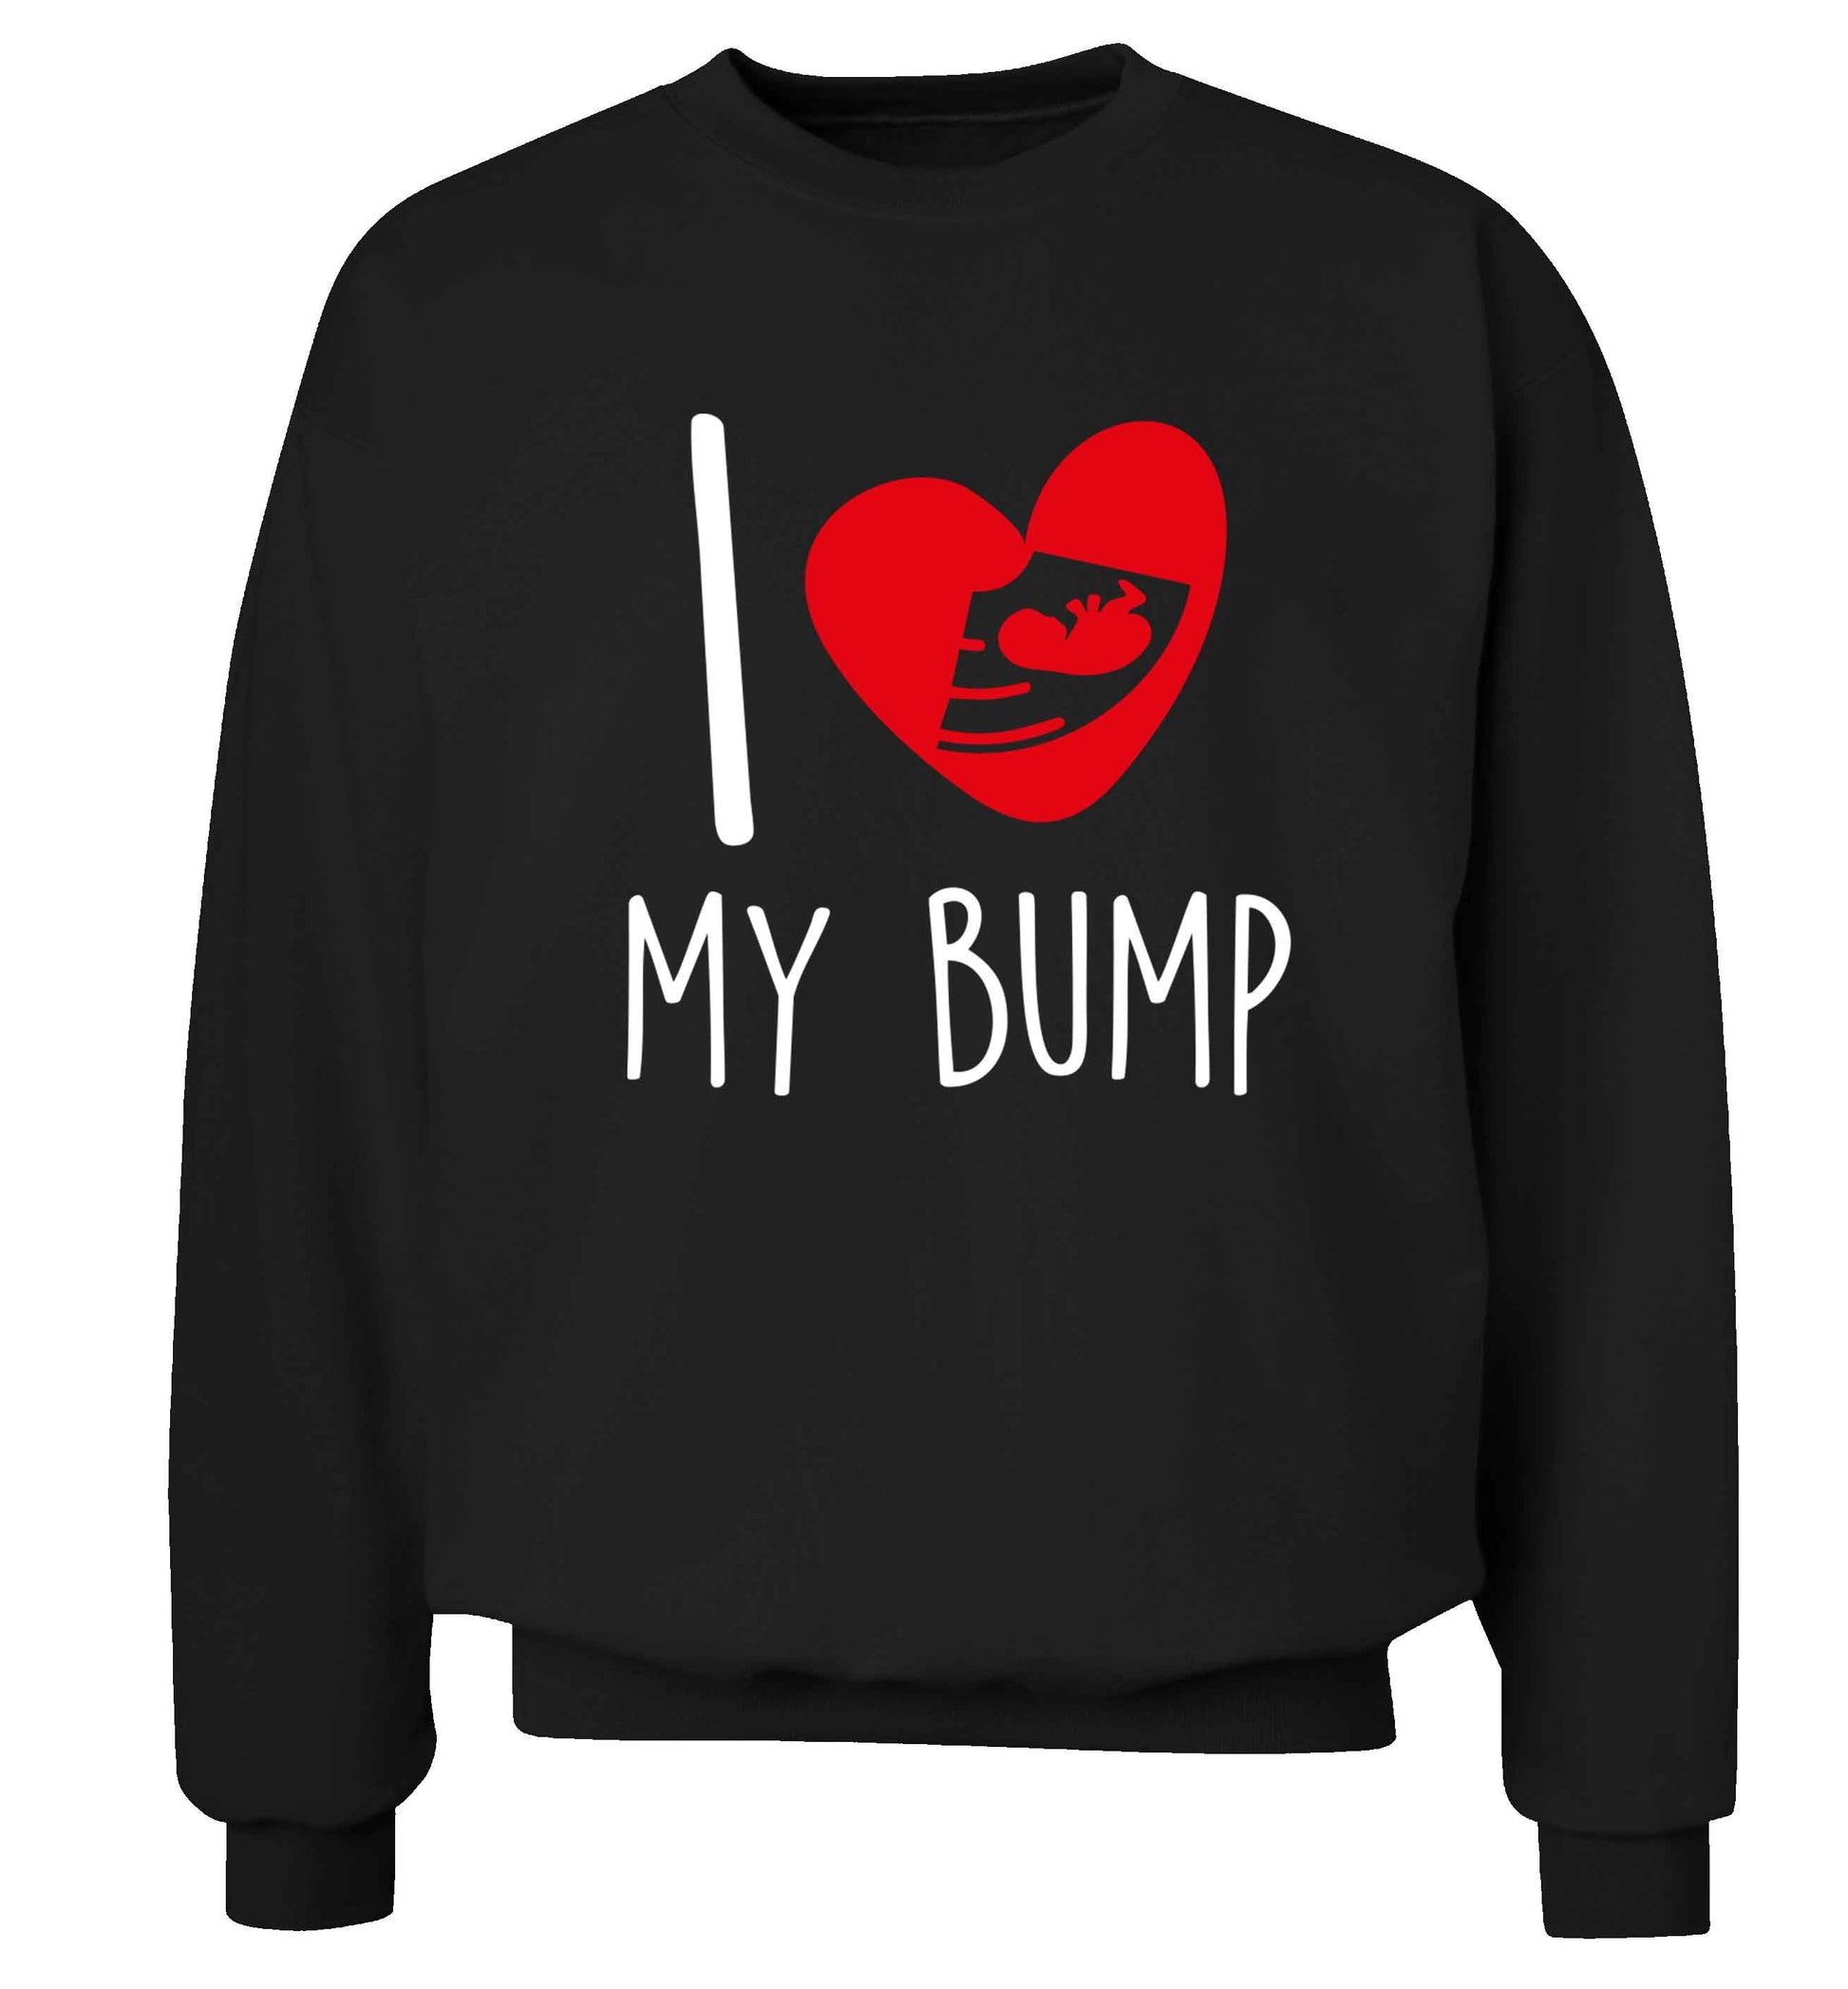 I love my bump Adult's unisex black Sweater 2XL